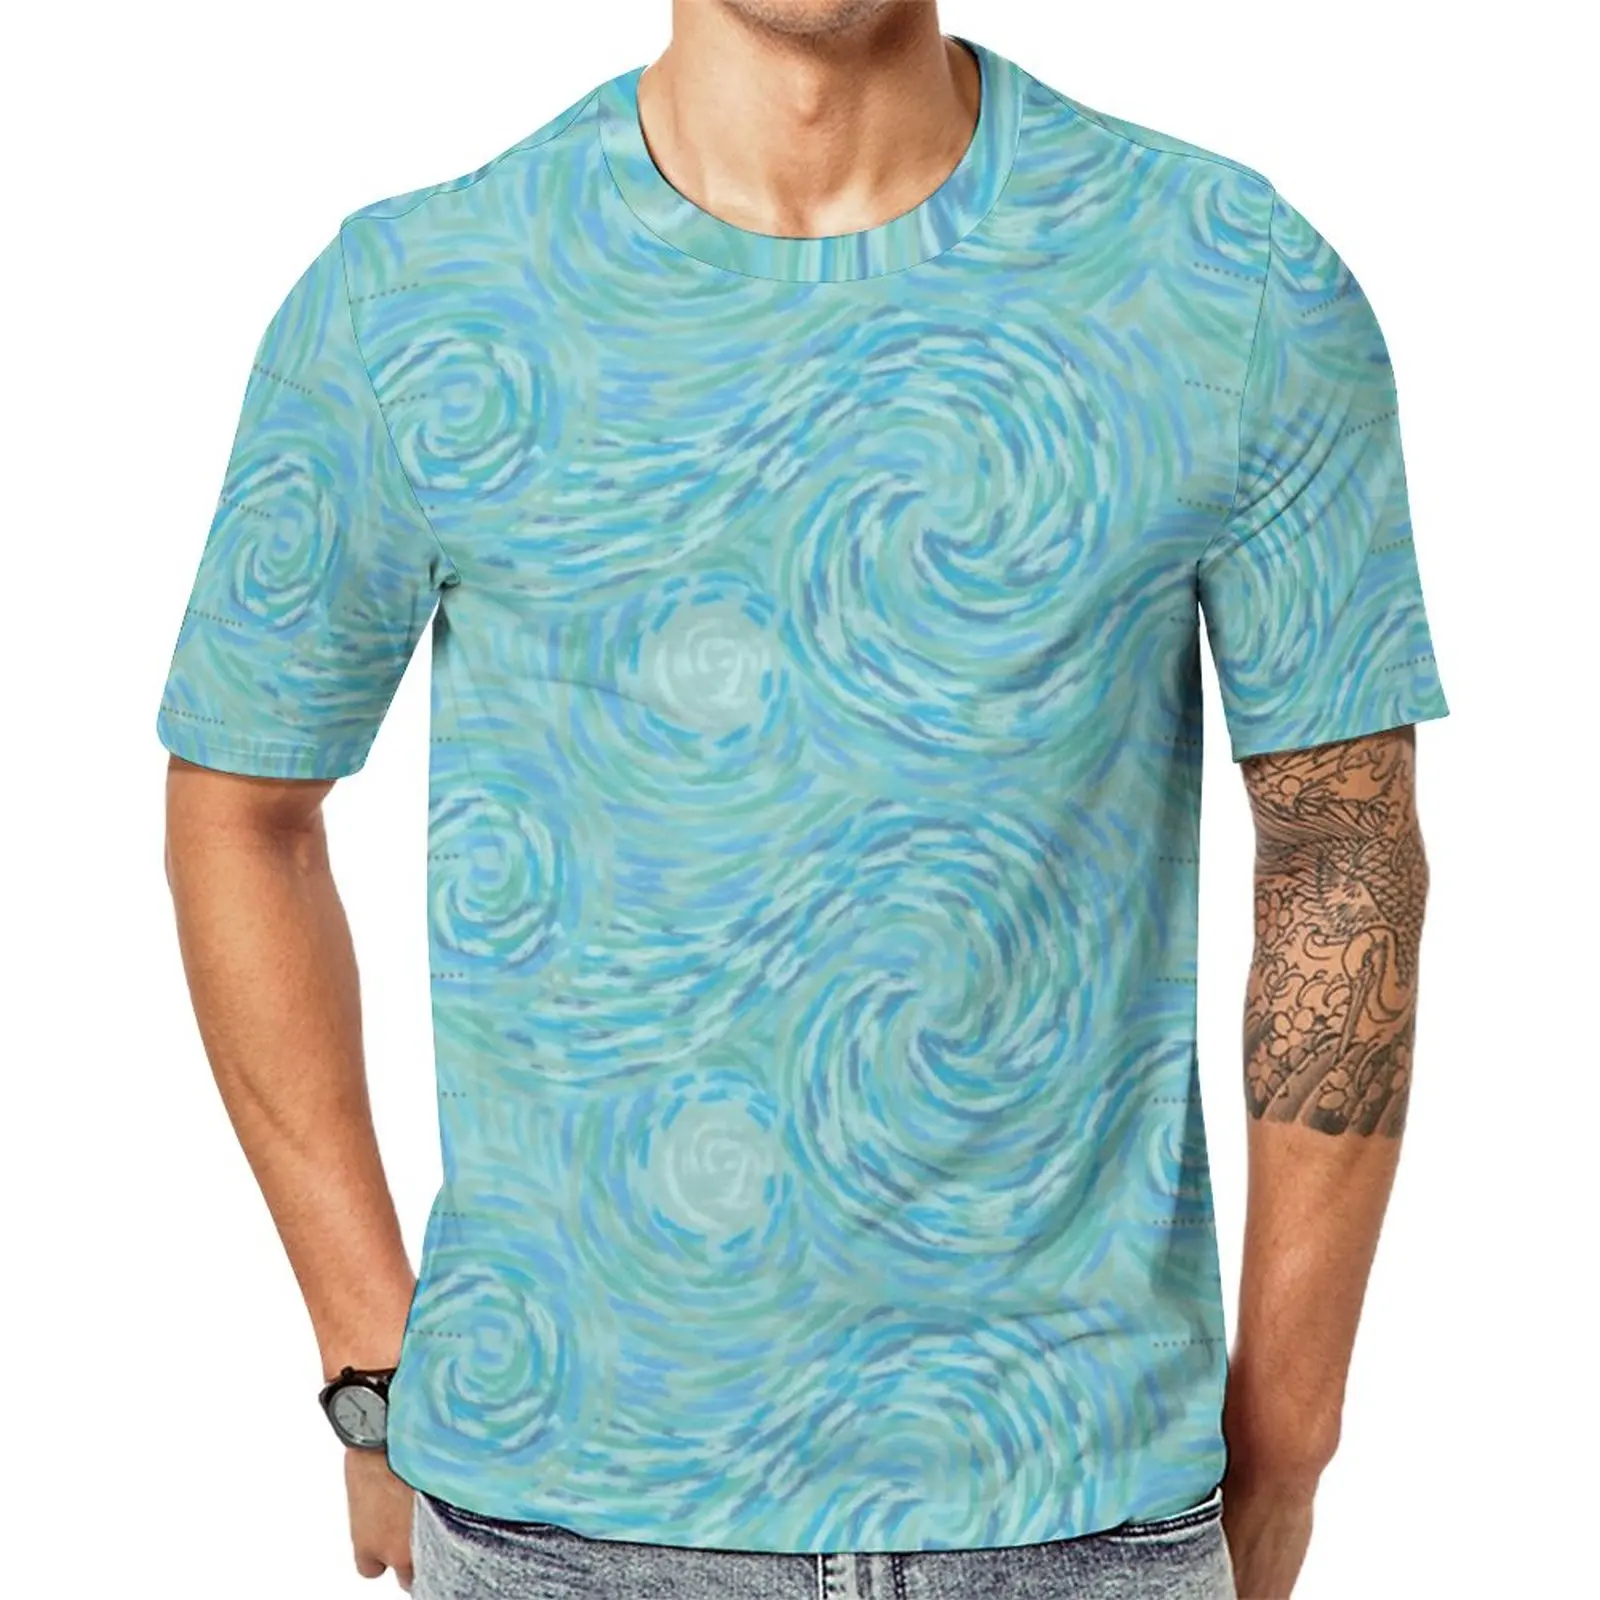 

Bright Teal Blue And Gray Swirl T-Shirt Man Van Gogh Classic T-Shirts Summer Vintage Tees Short-Sleeved Custom Plus Size Tops